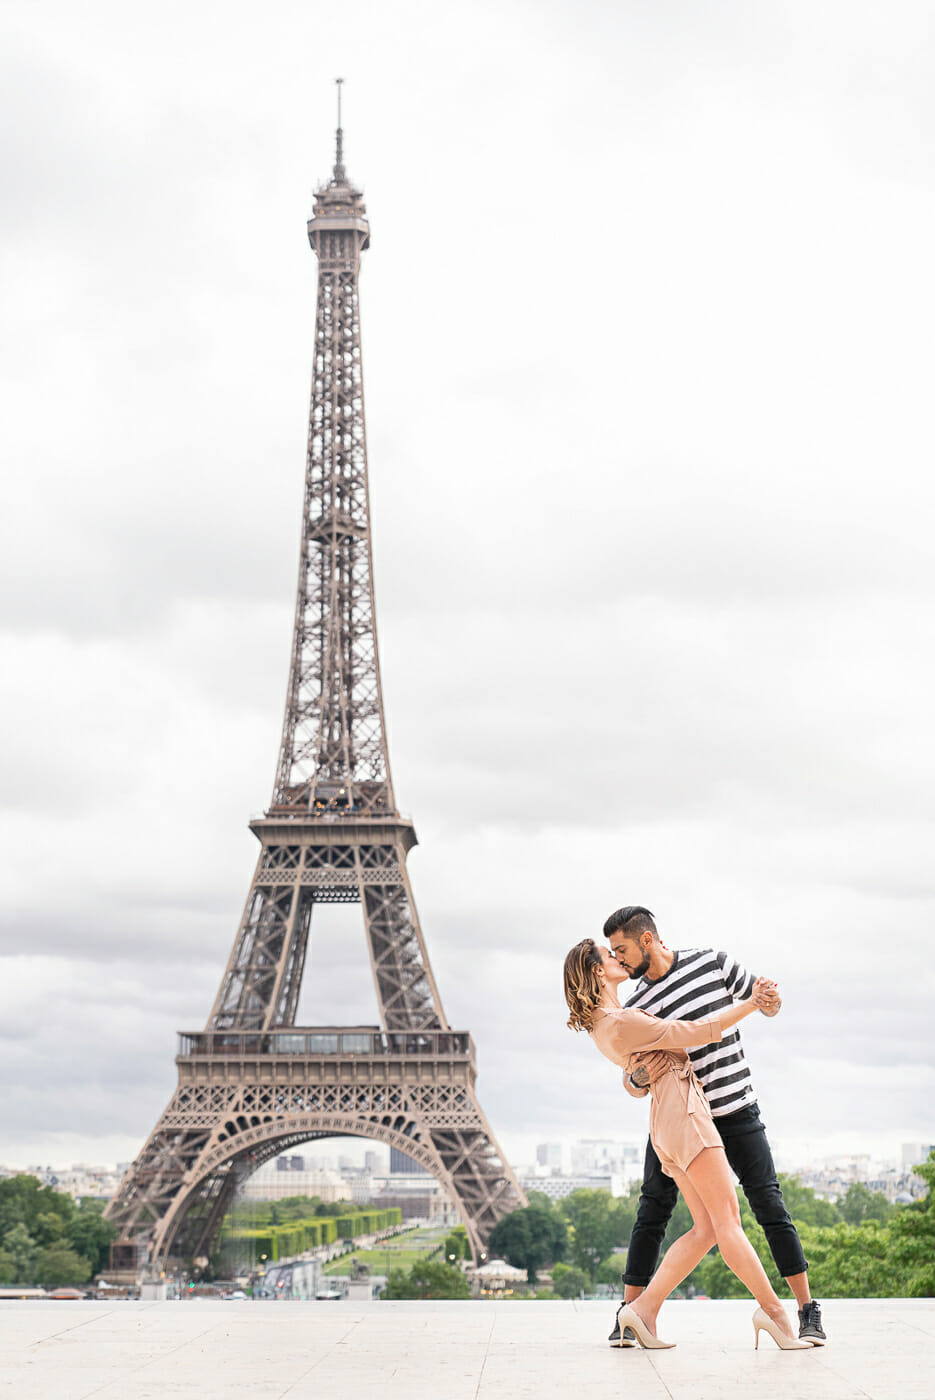 Eiffel Tower Brazilian couple photos at Trocadero during sunrise